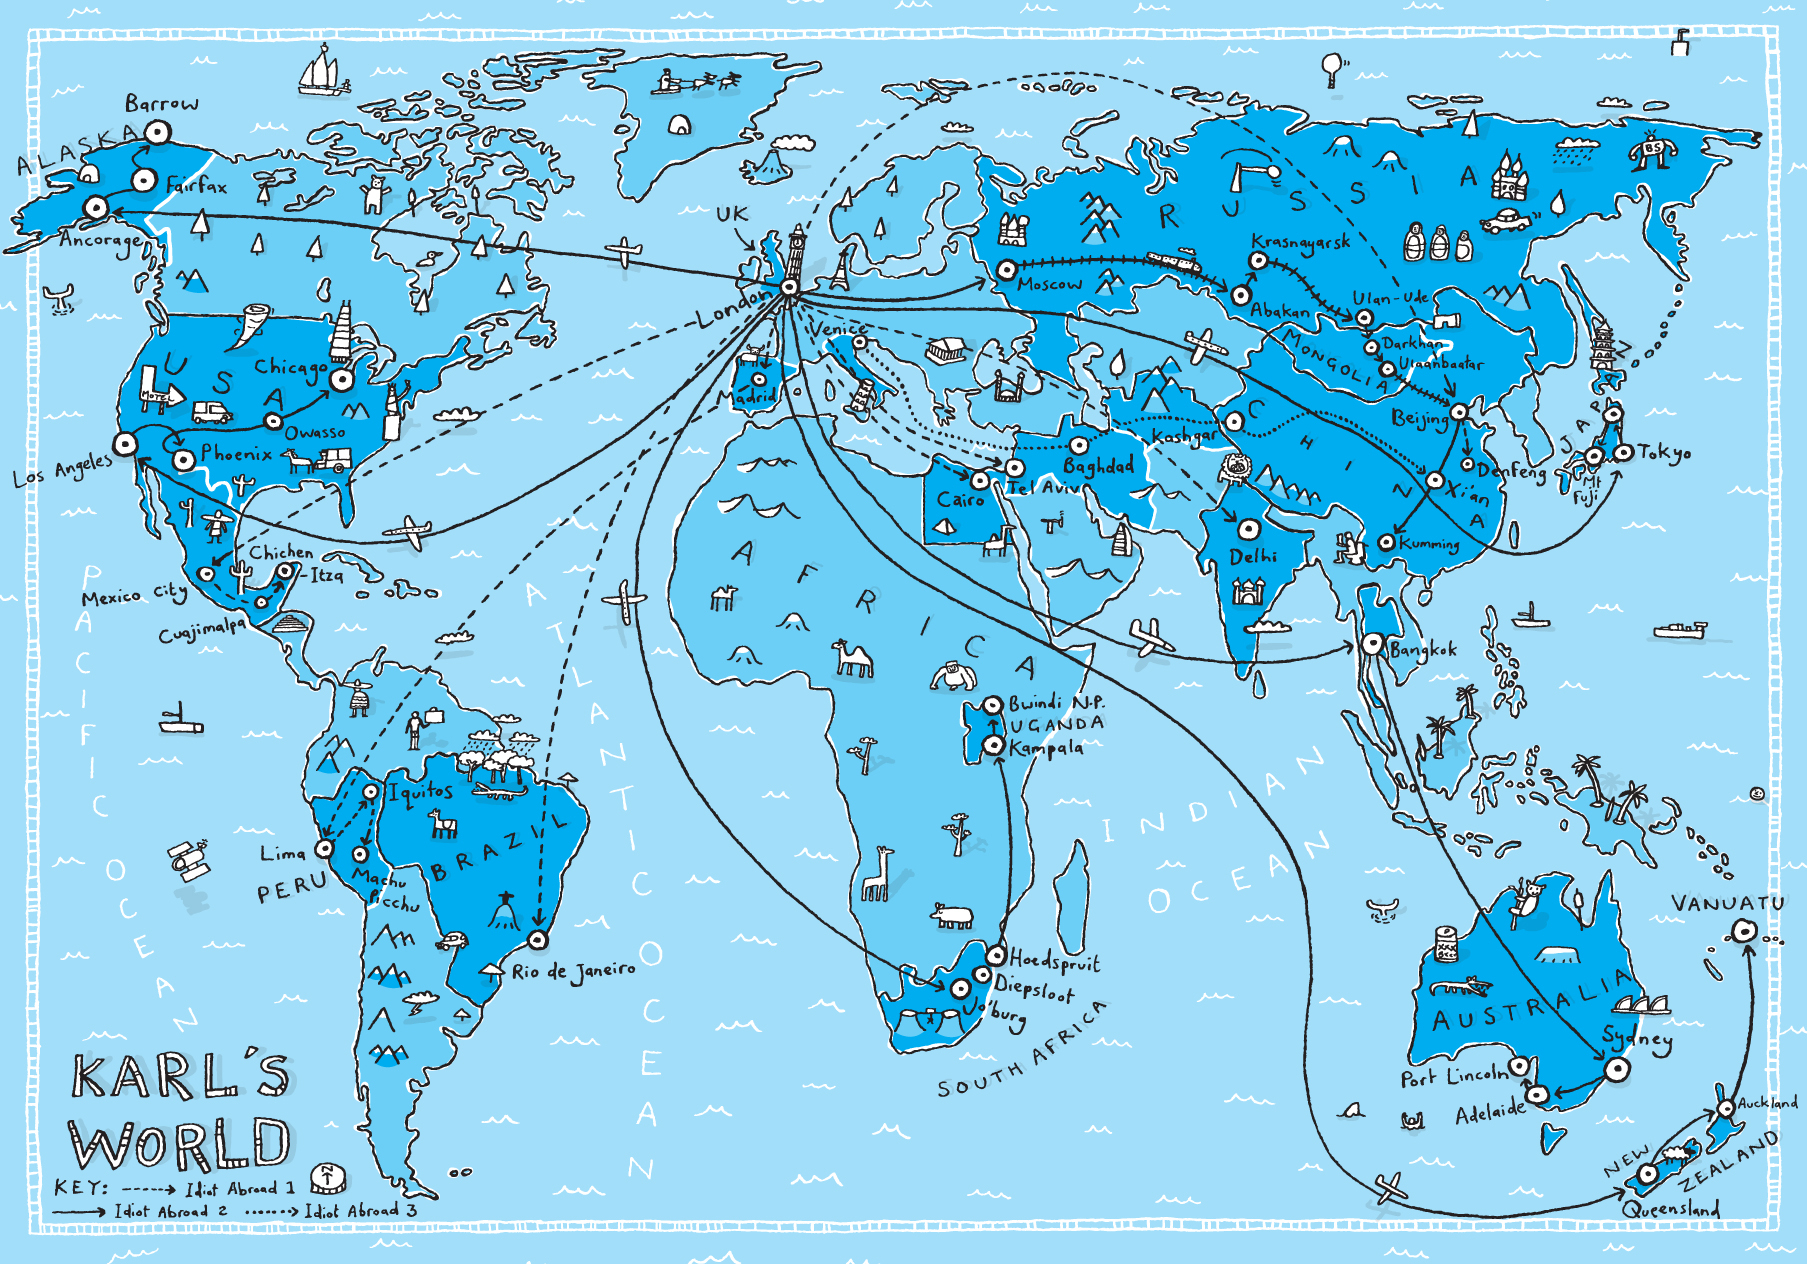 The World Of Karl Pilkington World Map